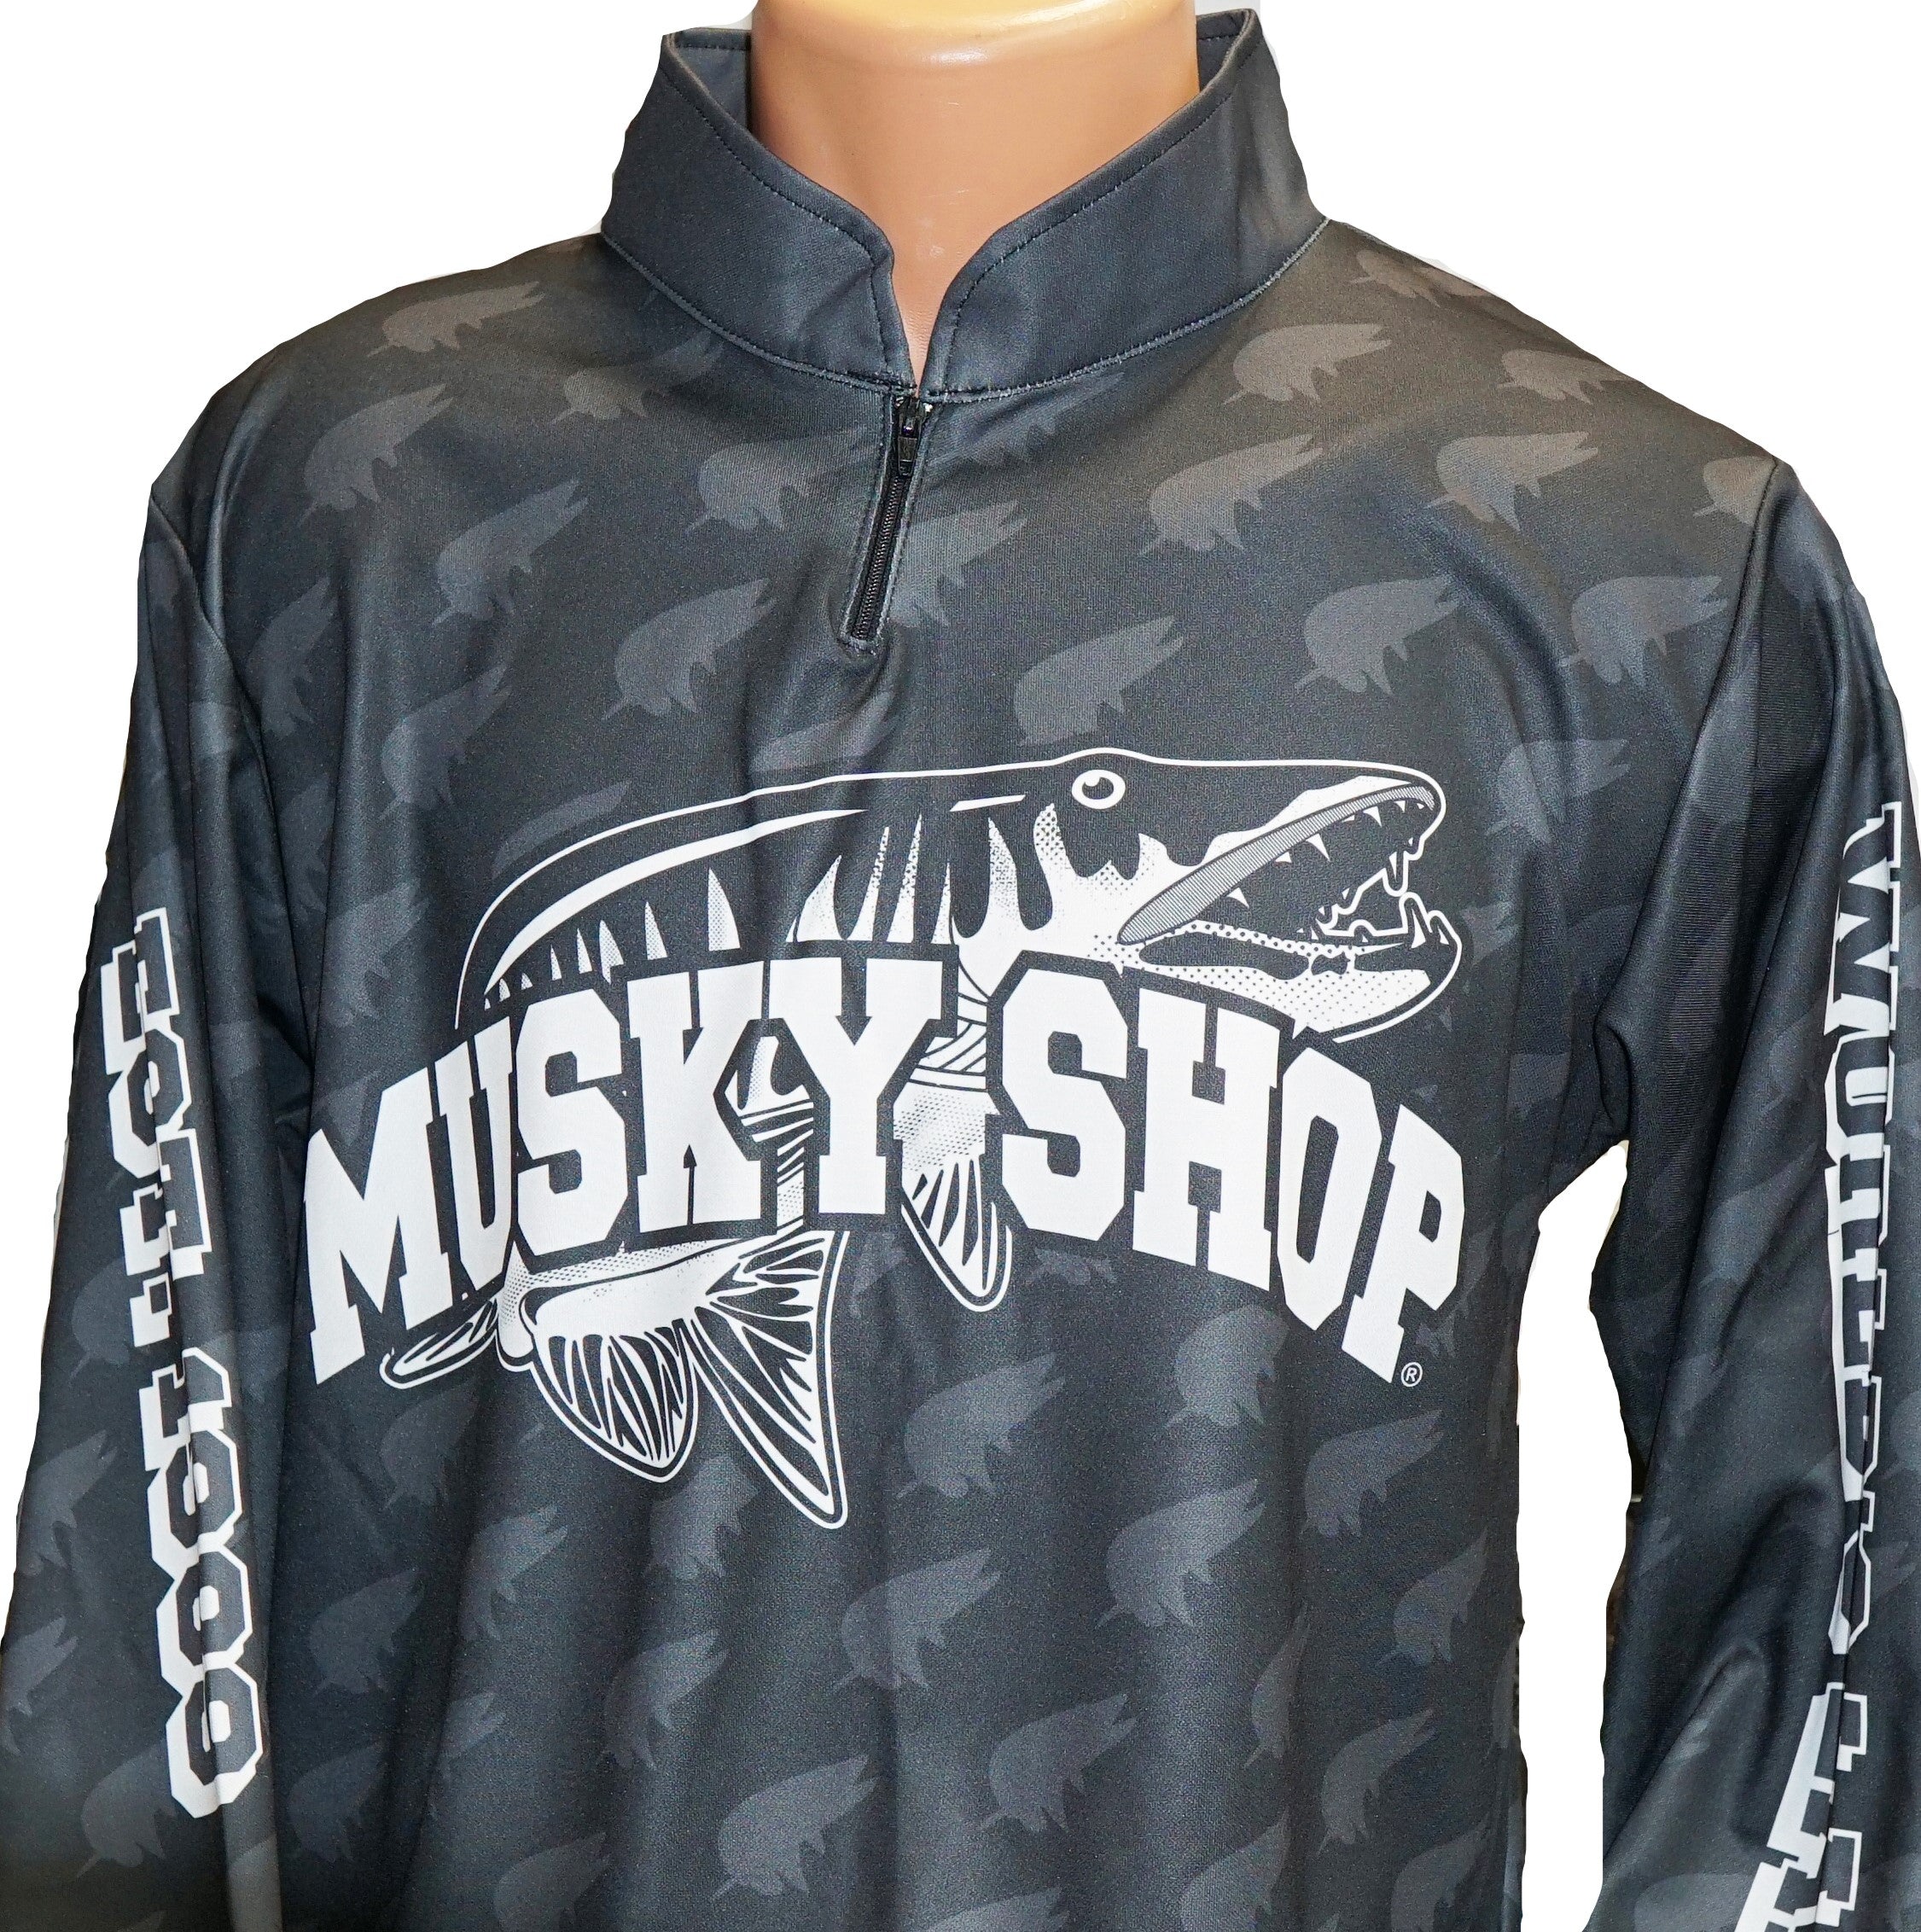 Musky Shop Long Sleeve Quarter Zip Shirt Black Gray White Large